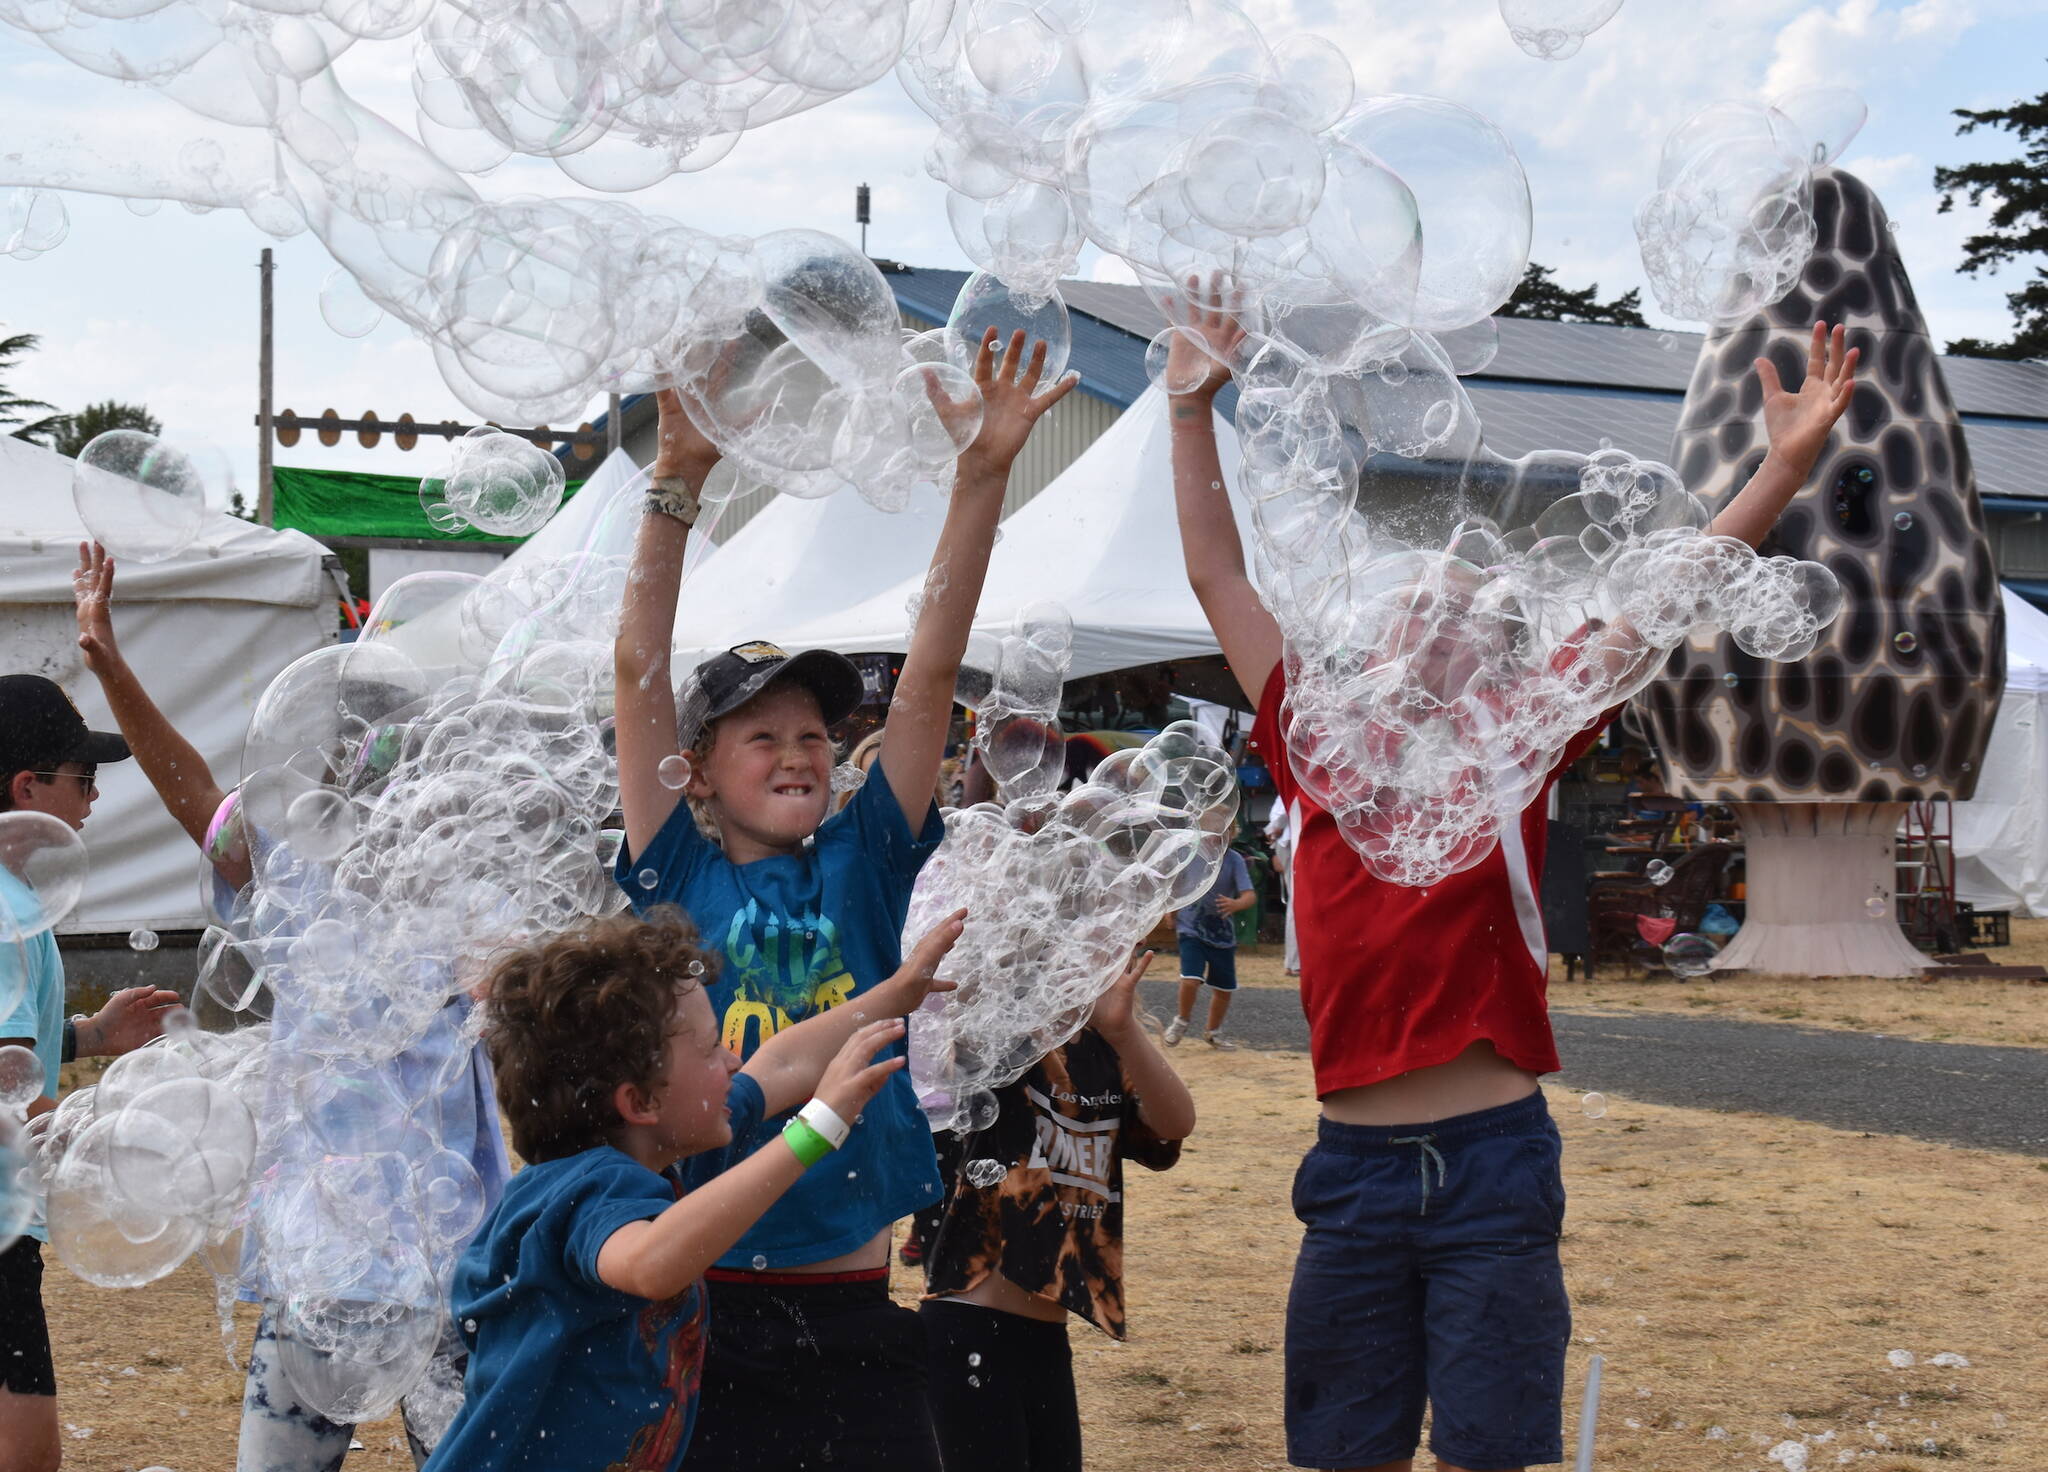 Kelley Balcomb-Bartok Staff photo
Enjoying time at the fair with bubbles